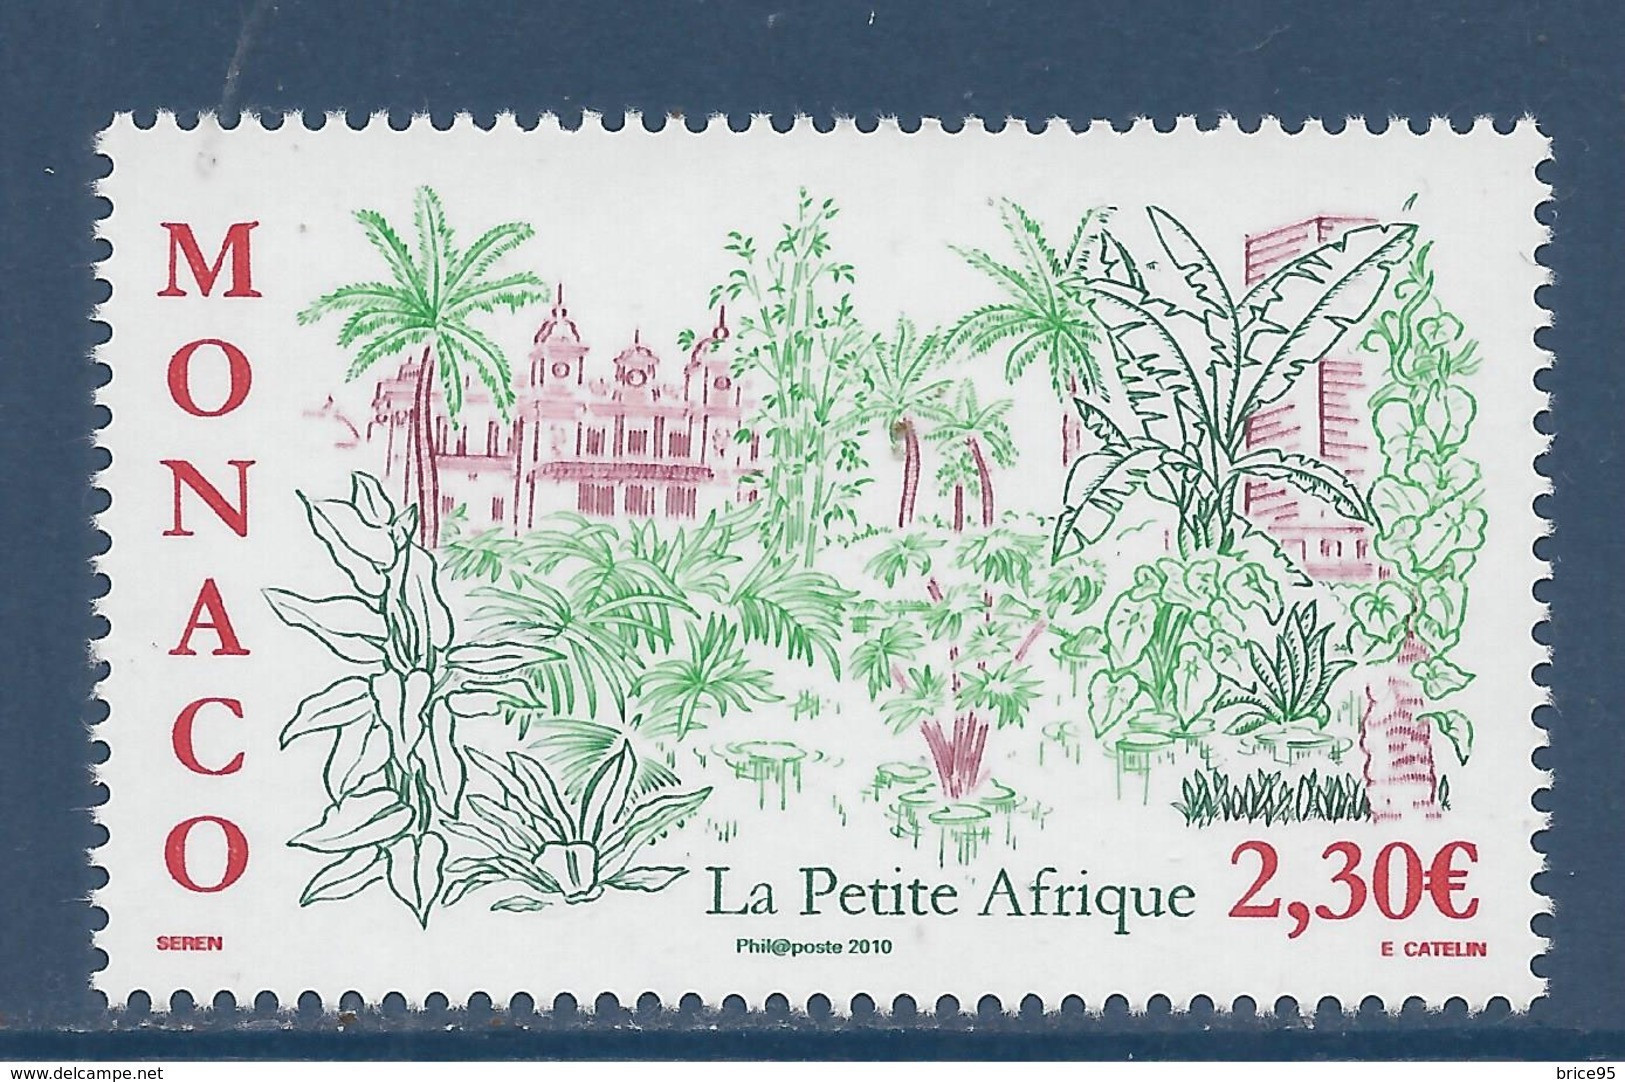 Monaco - YT N° 2748 ** - Neuf Sans Charnière - 2010 - Unused Stamps